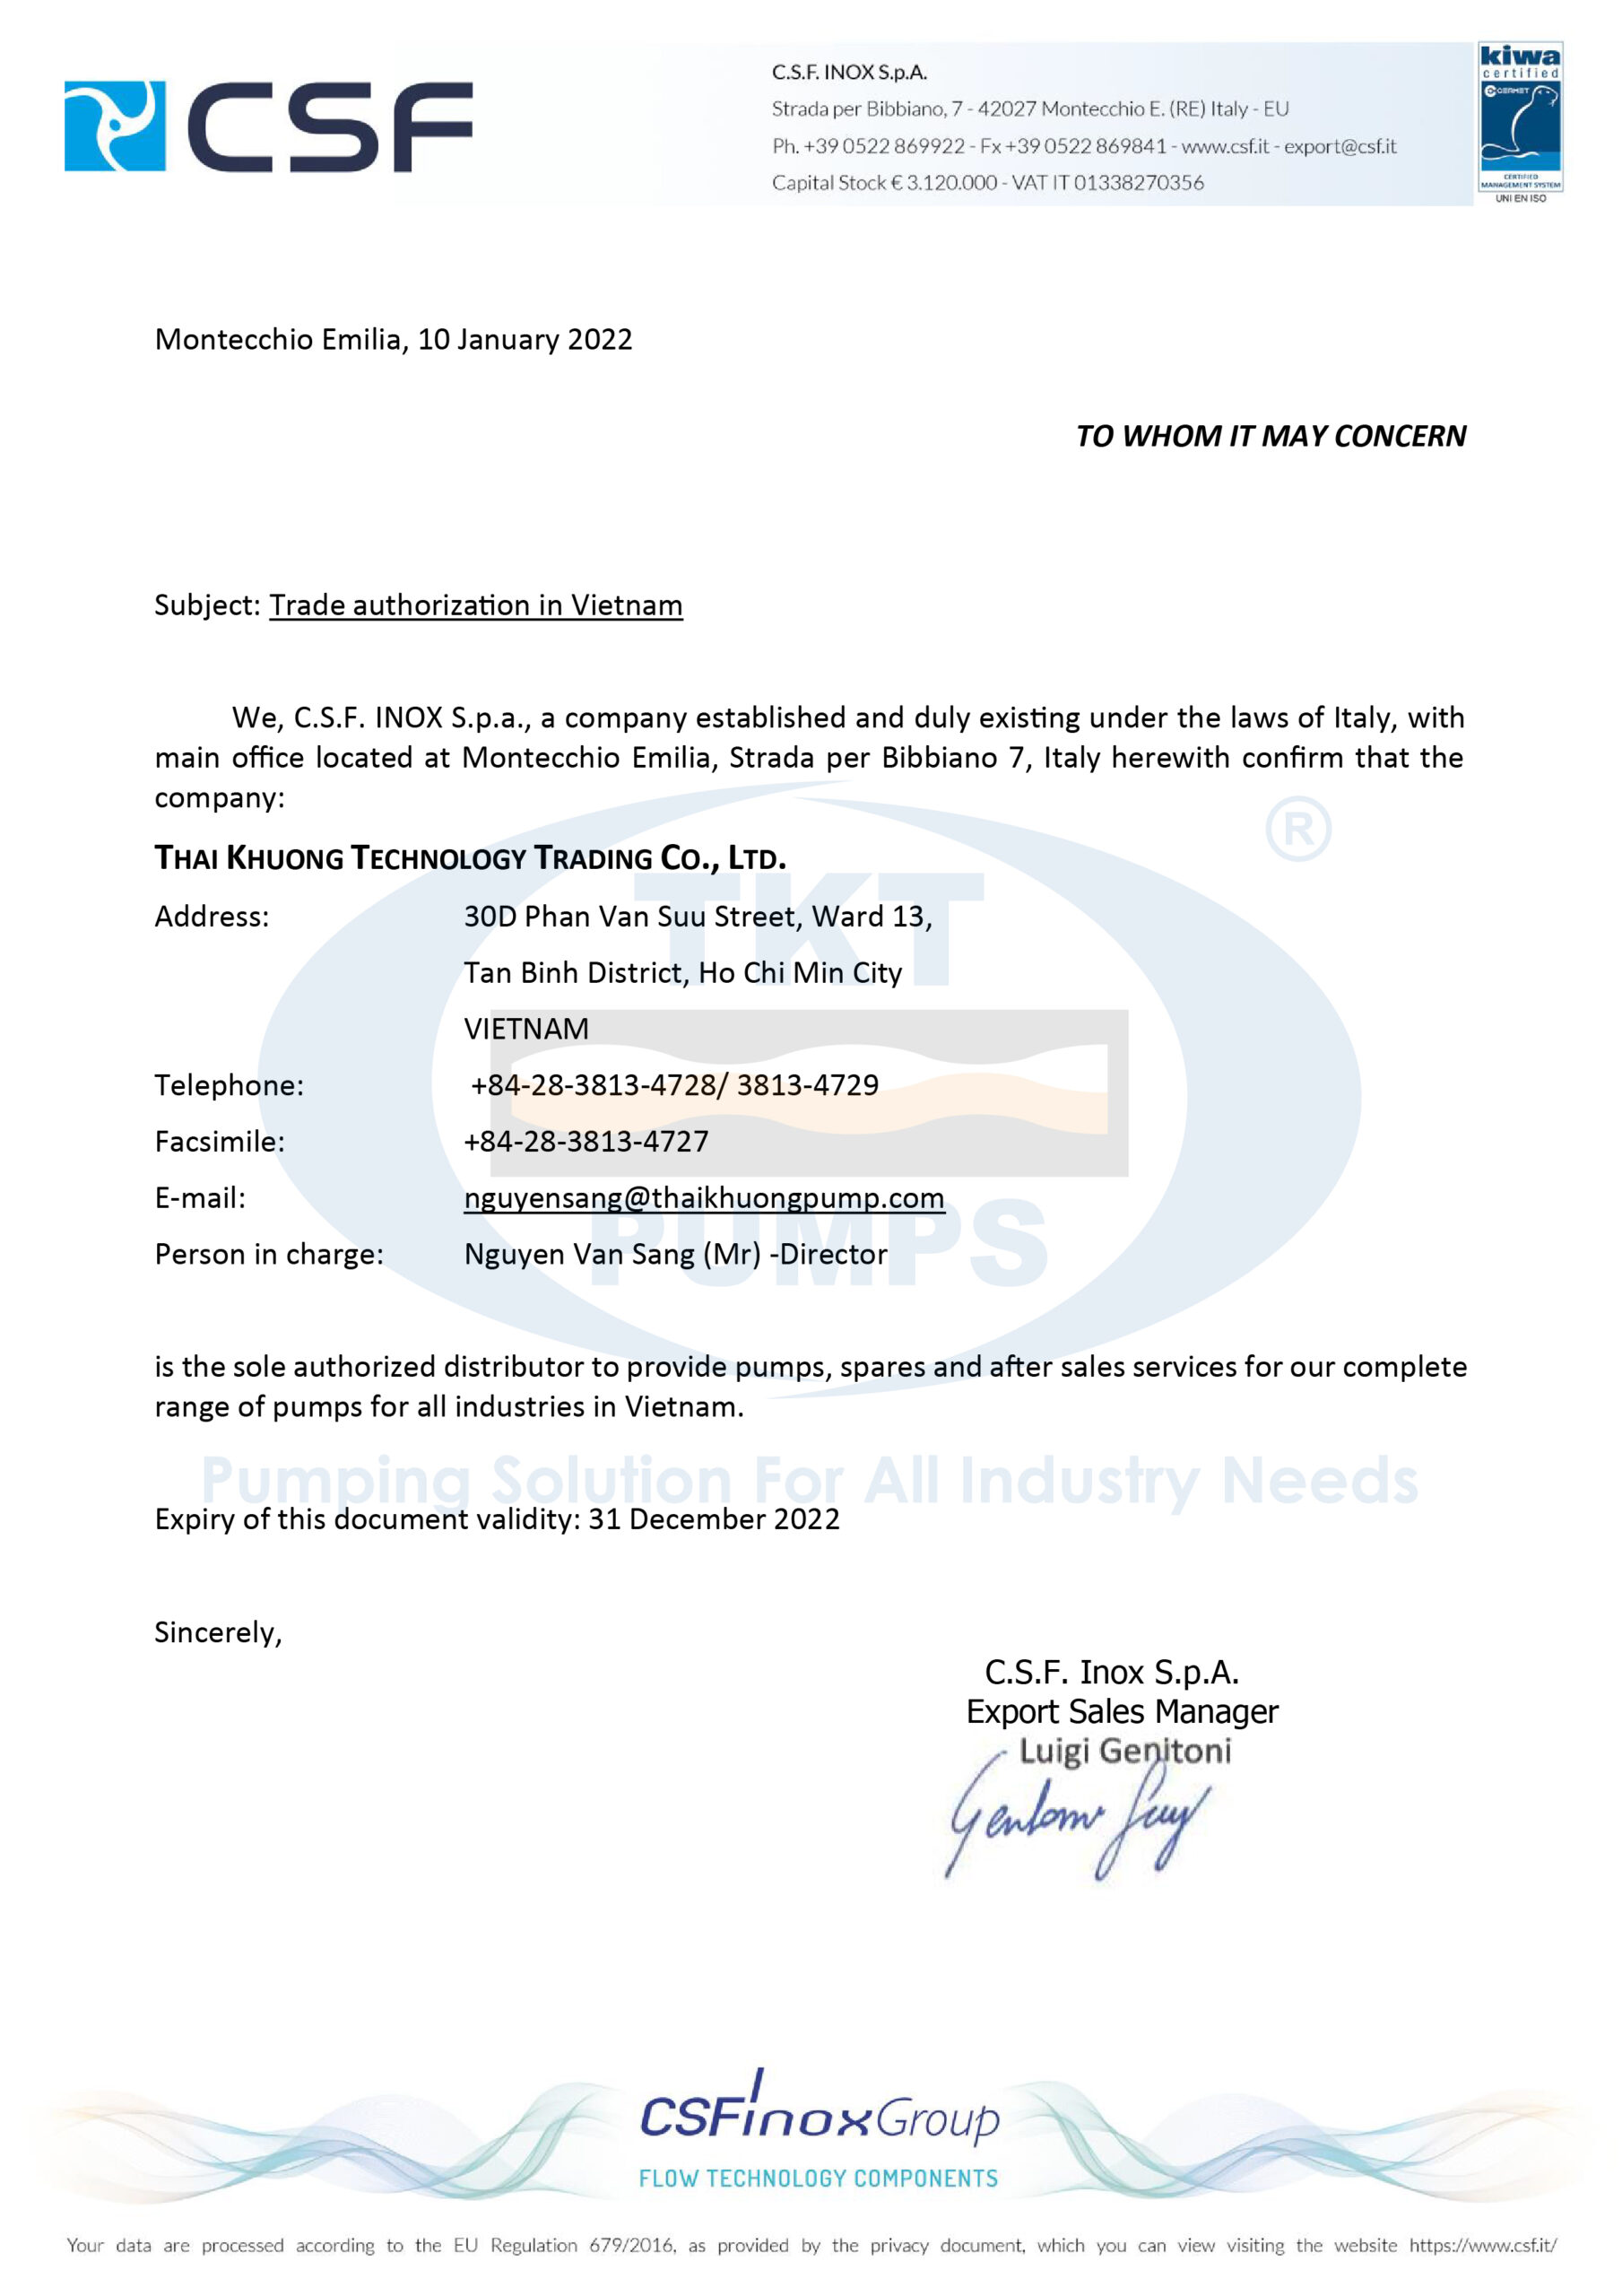 CSF Certificate